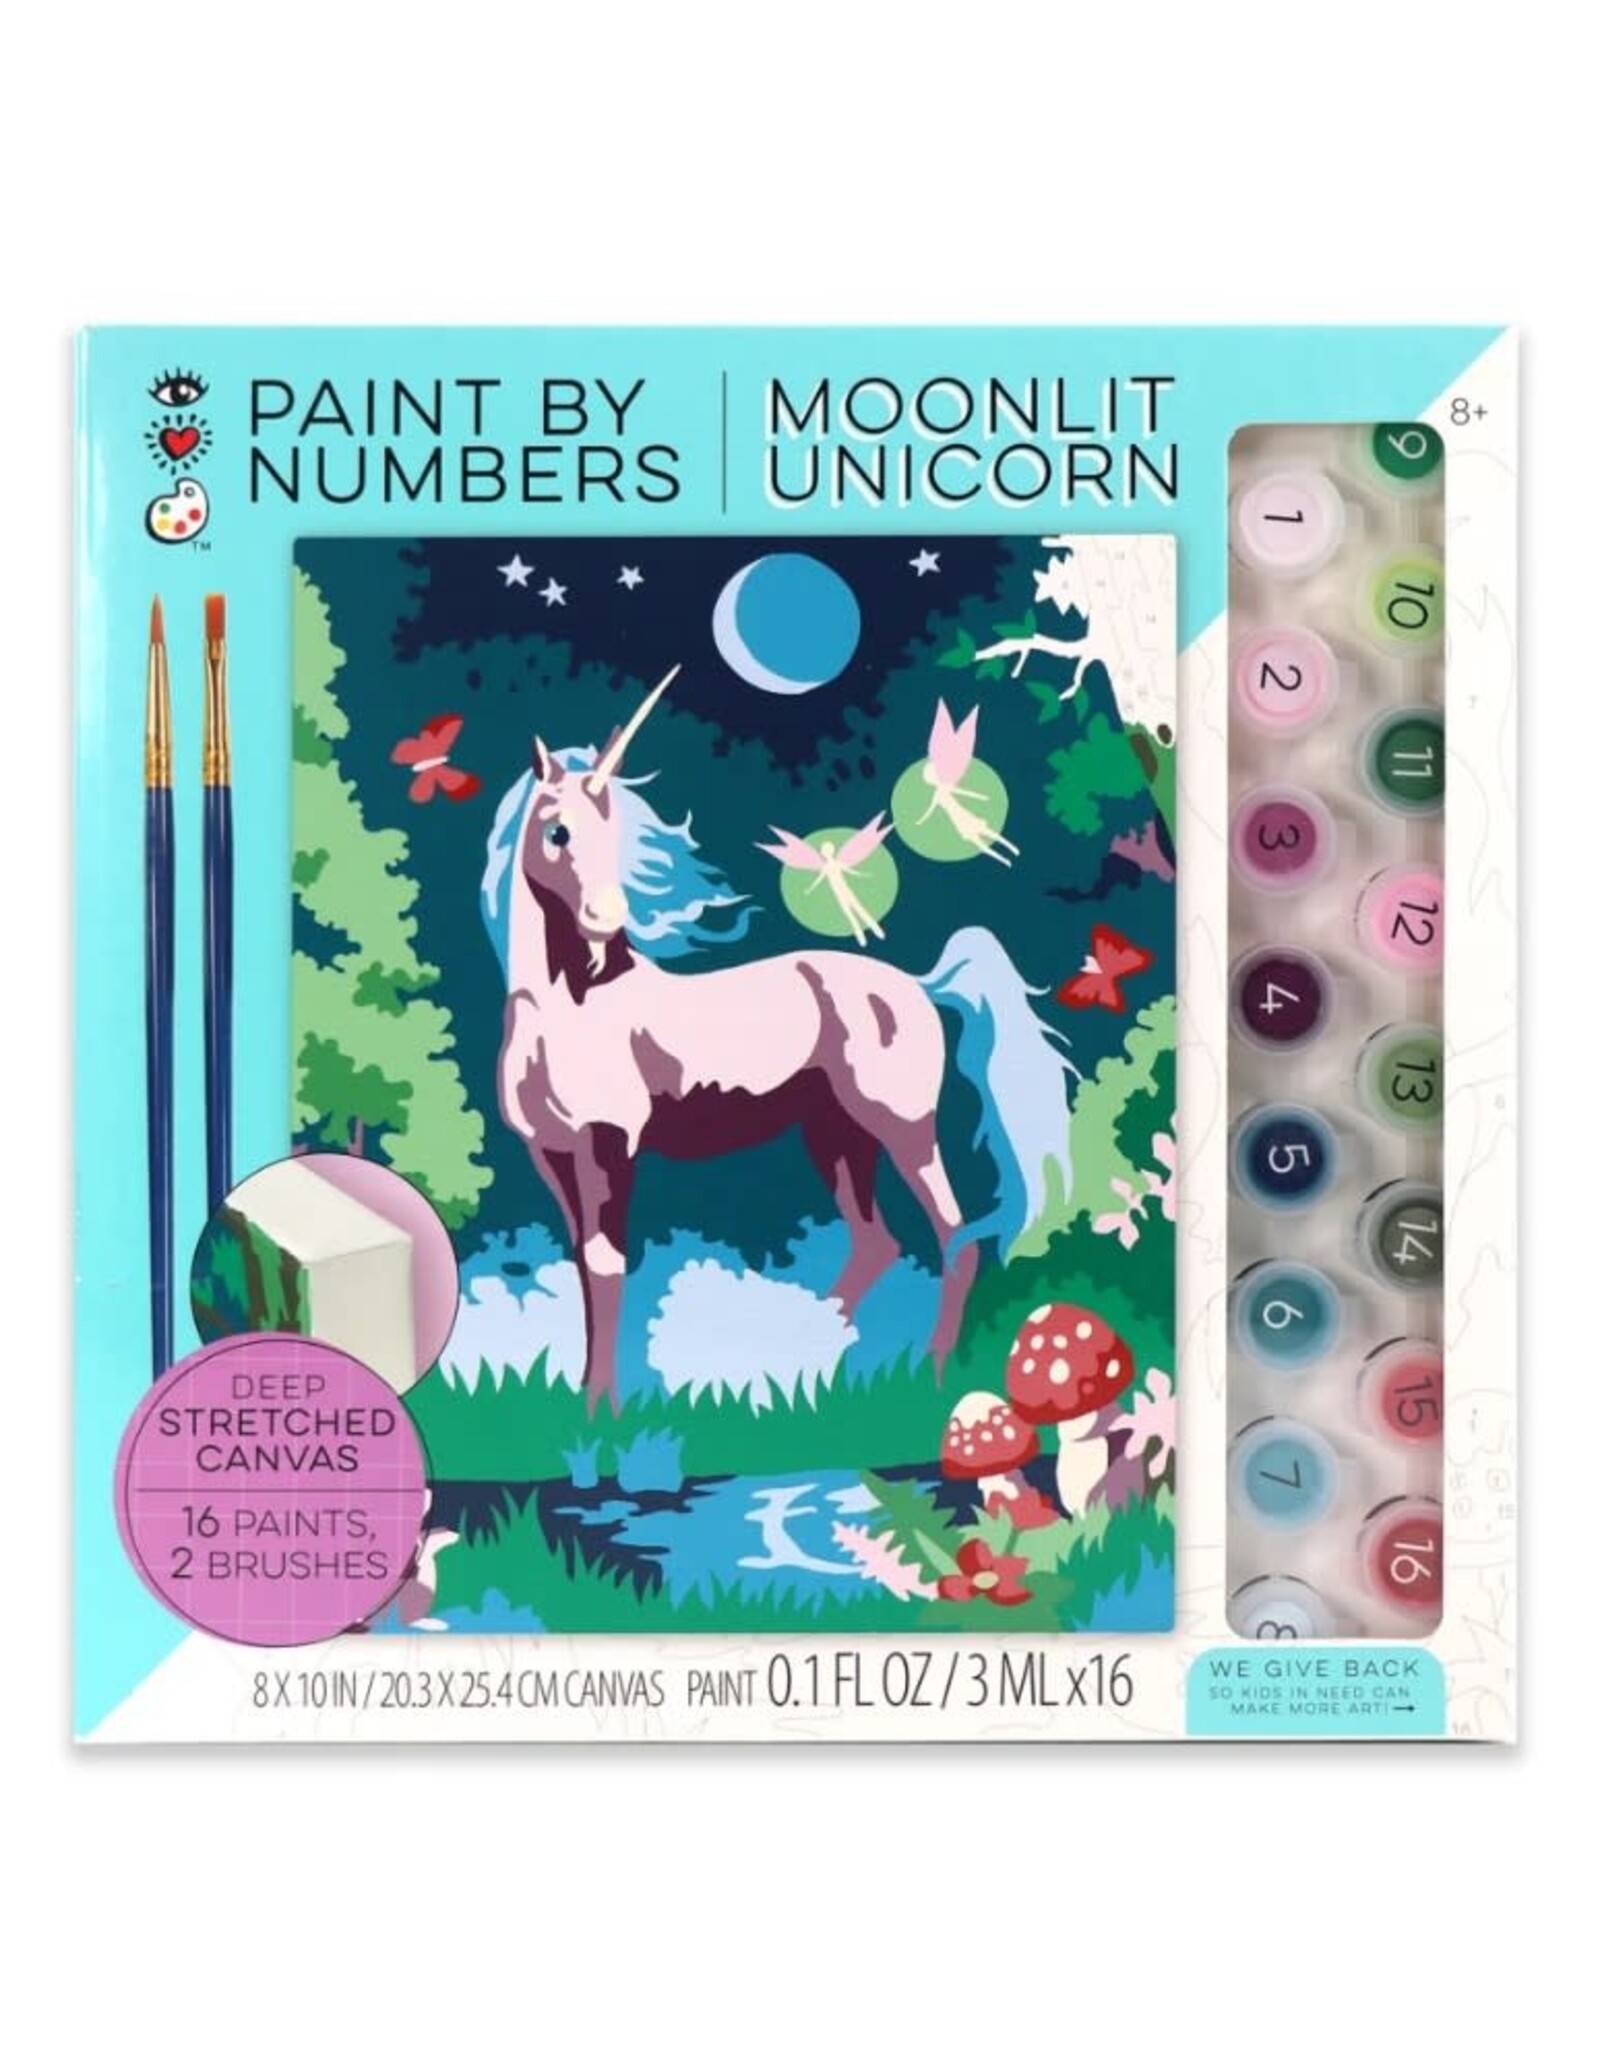 Paint By Number: Moonlit Unicorn